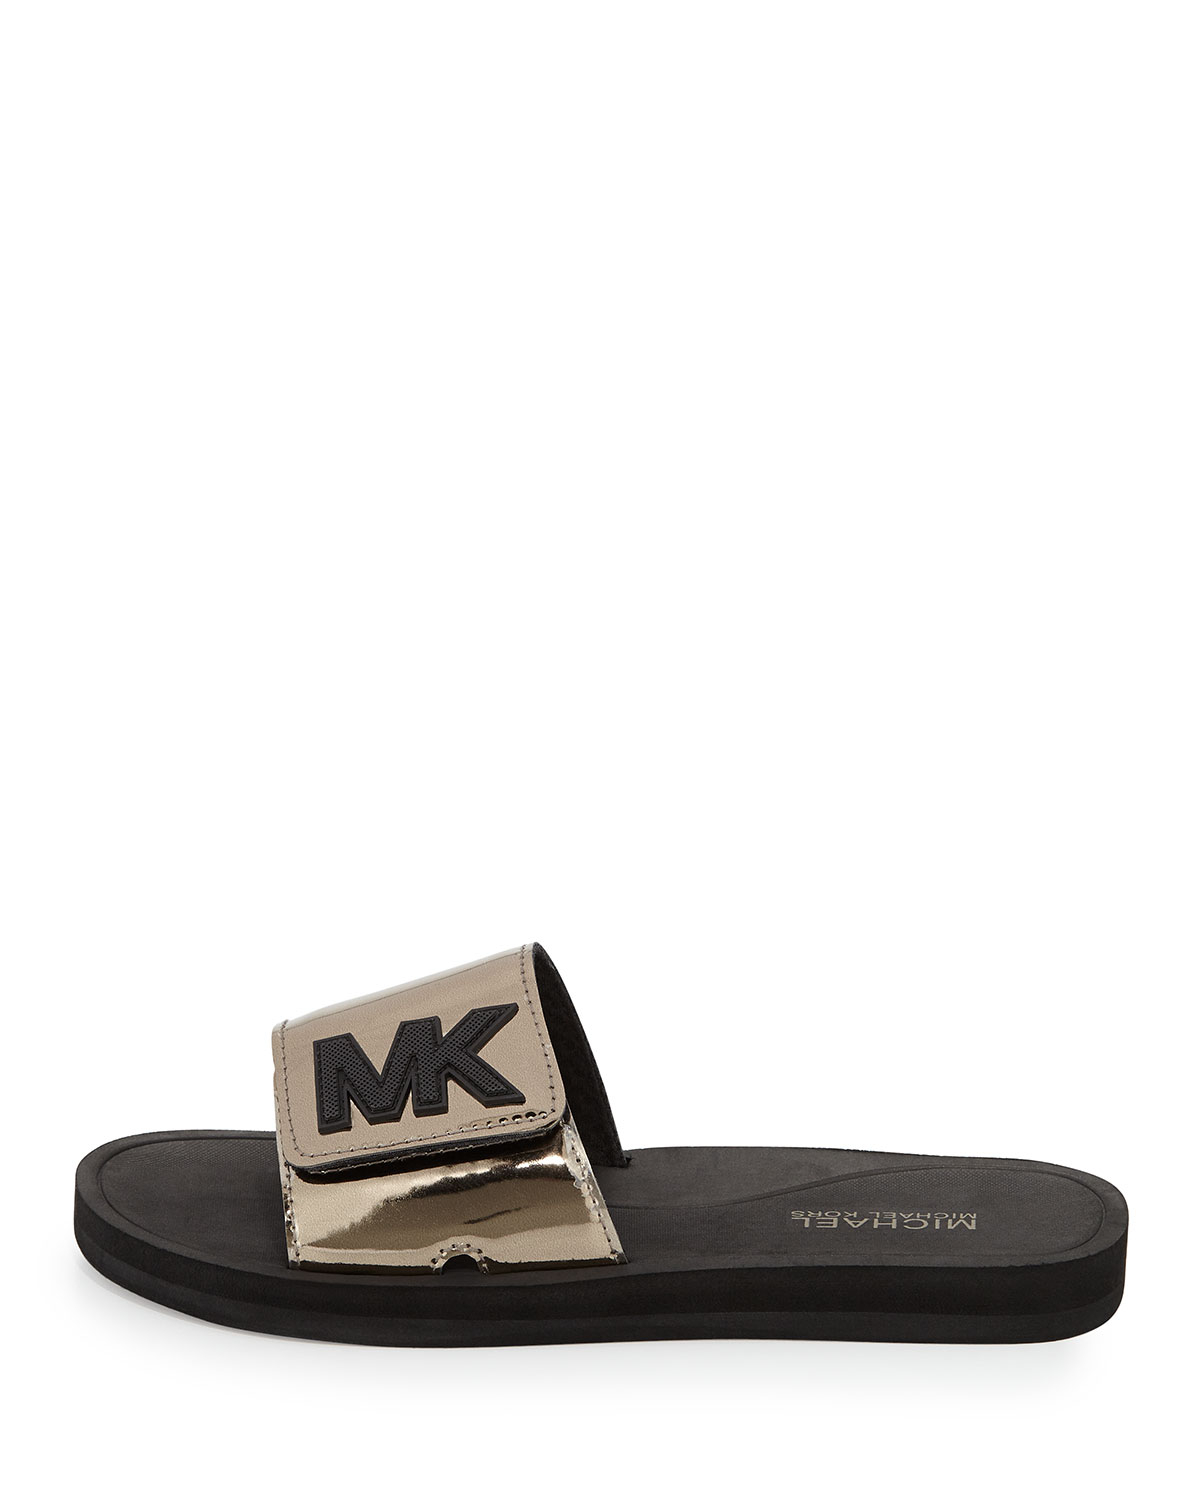 mk gold slippers